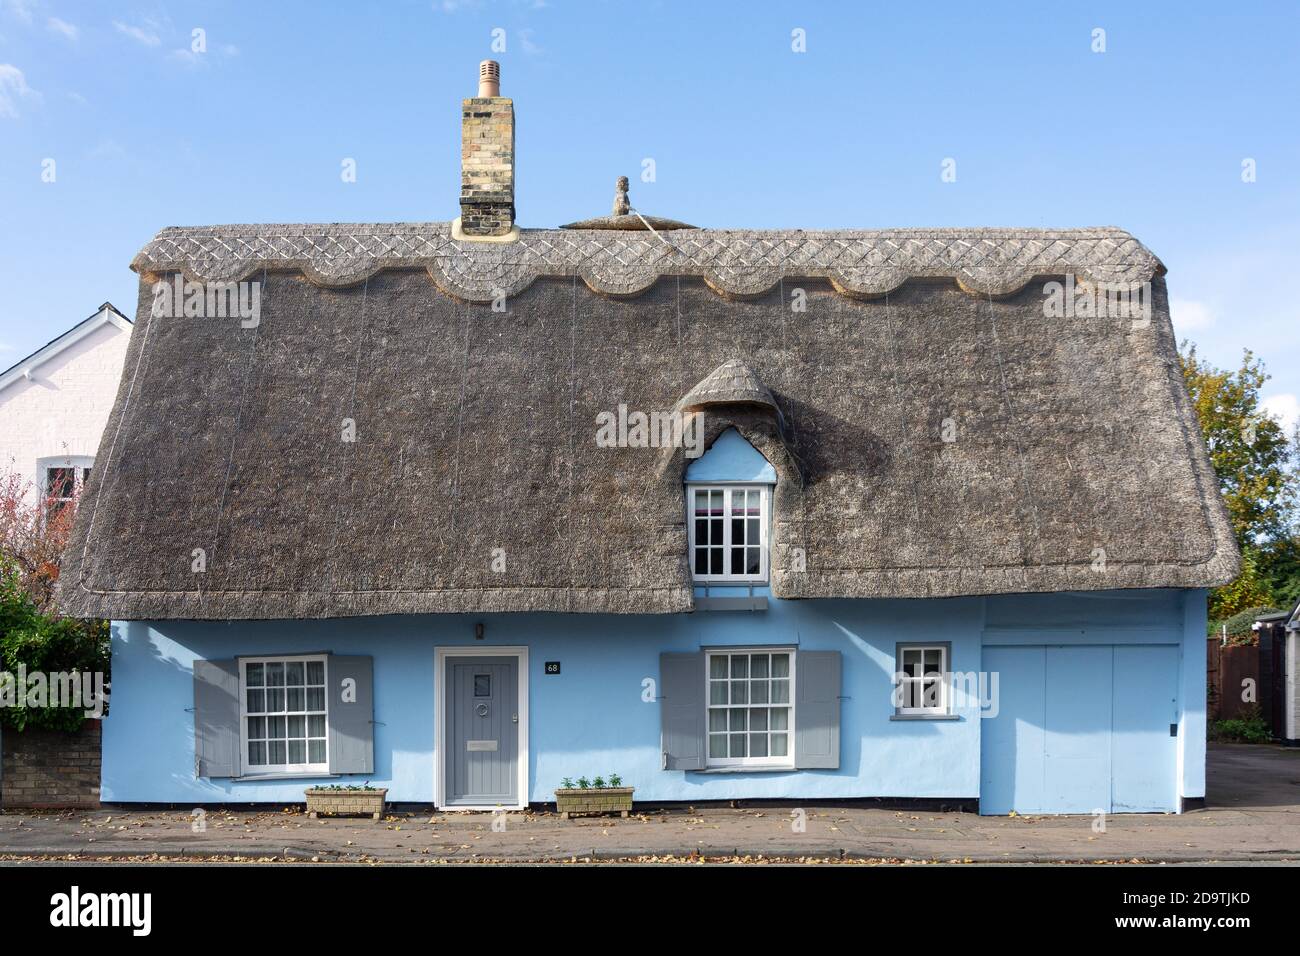 Maison de chaume, High Street, Great Shelford, Cambridgeshire, Angleterre, Royaume-Uni Banque D'Images